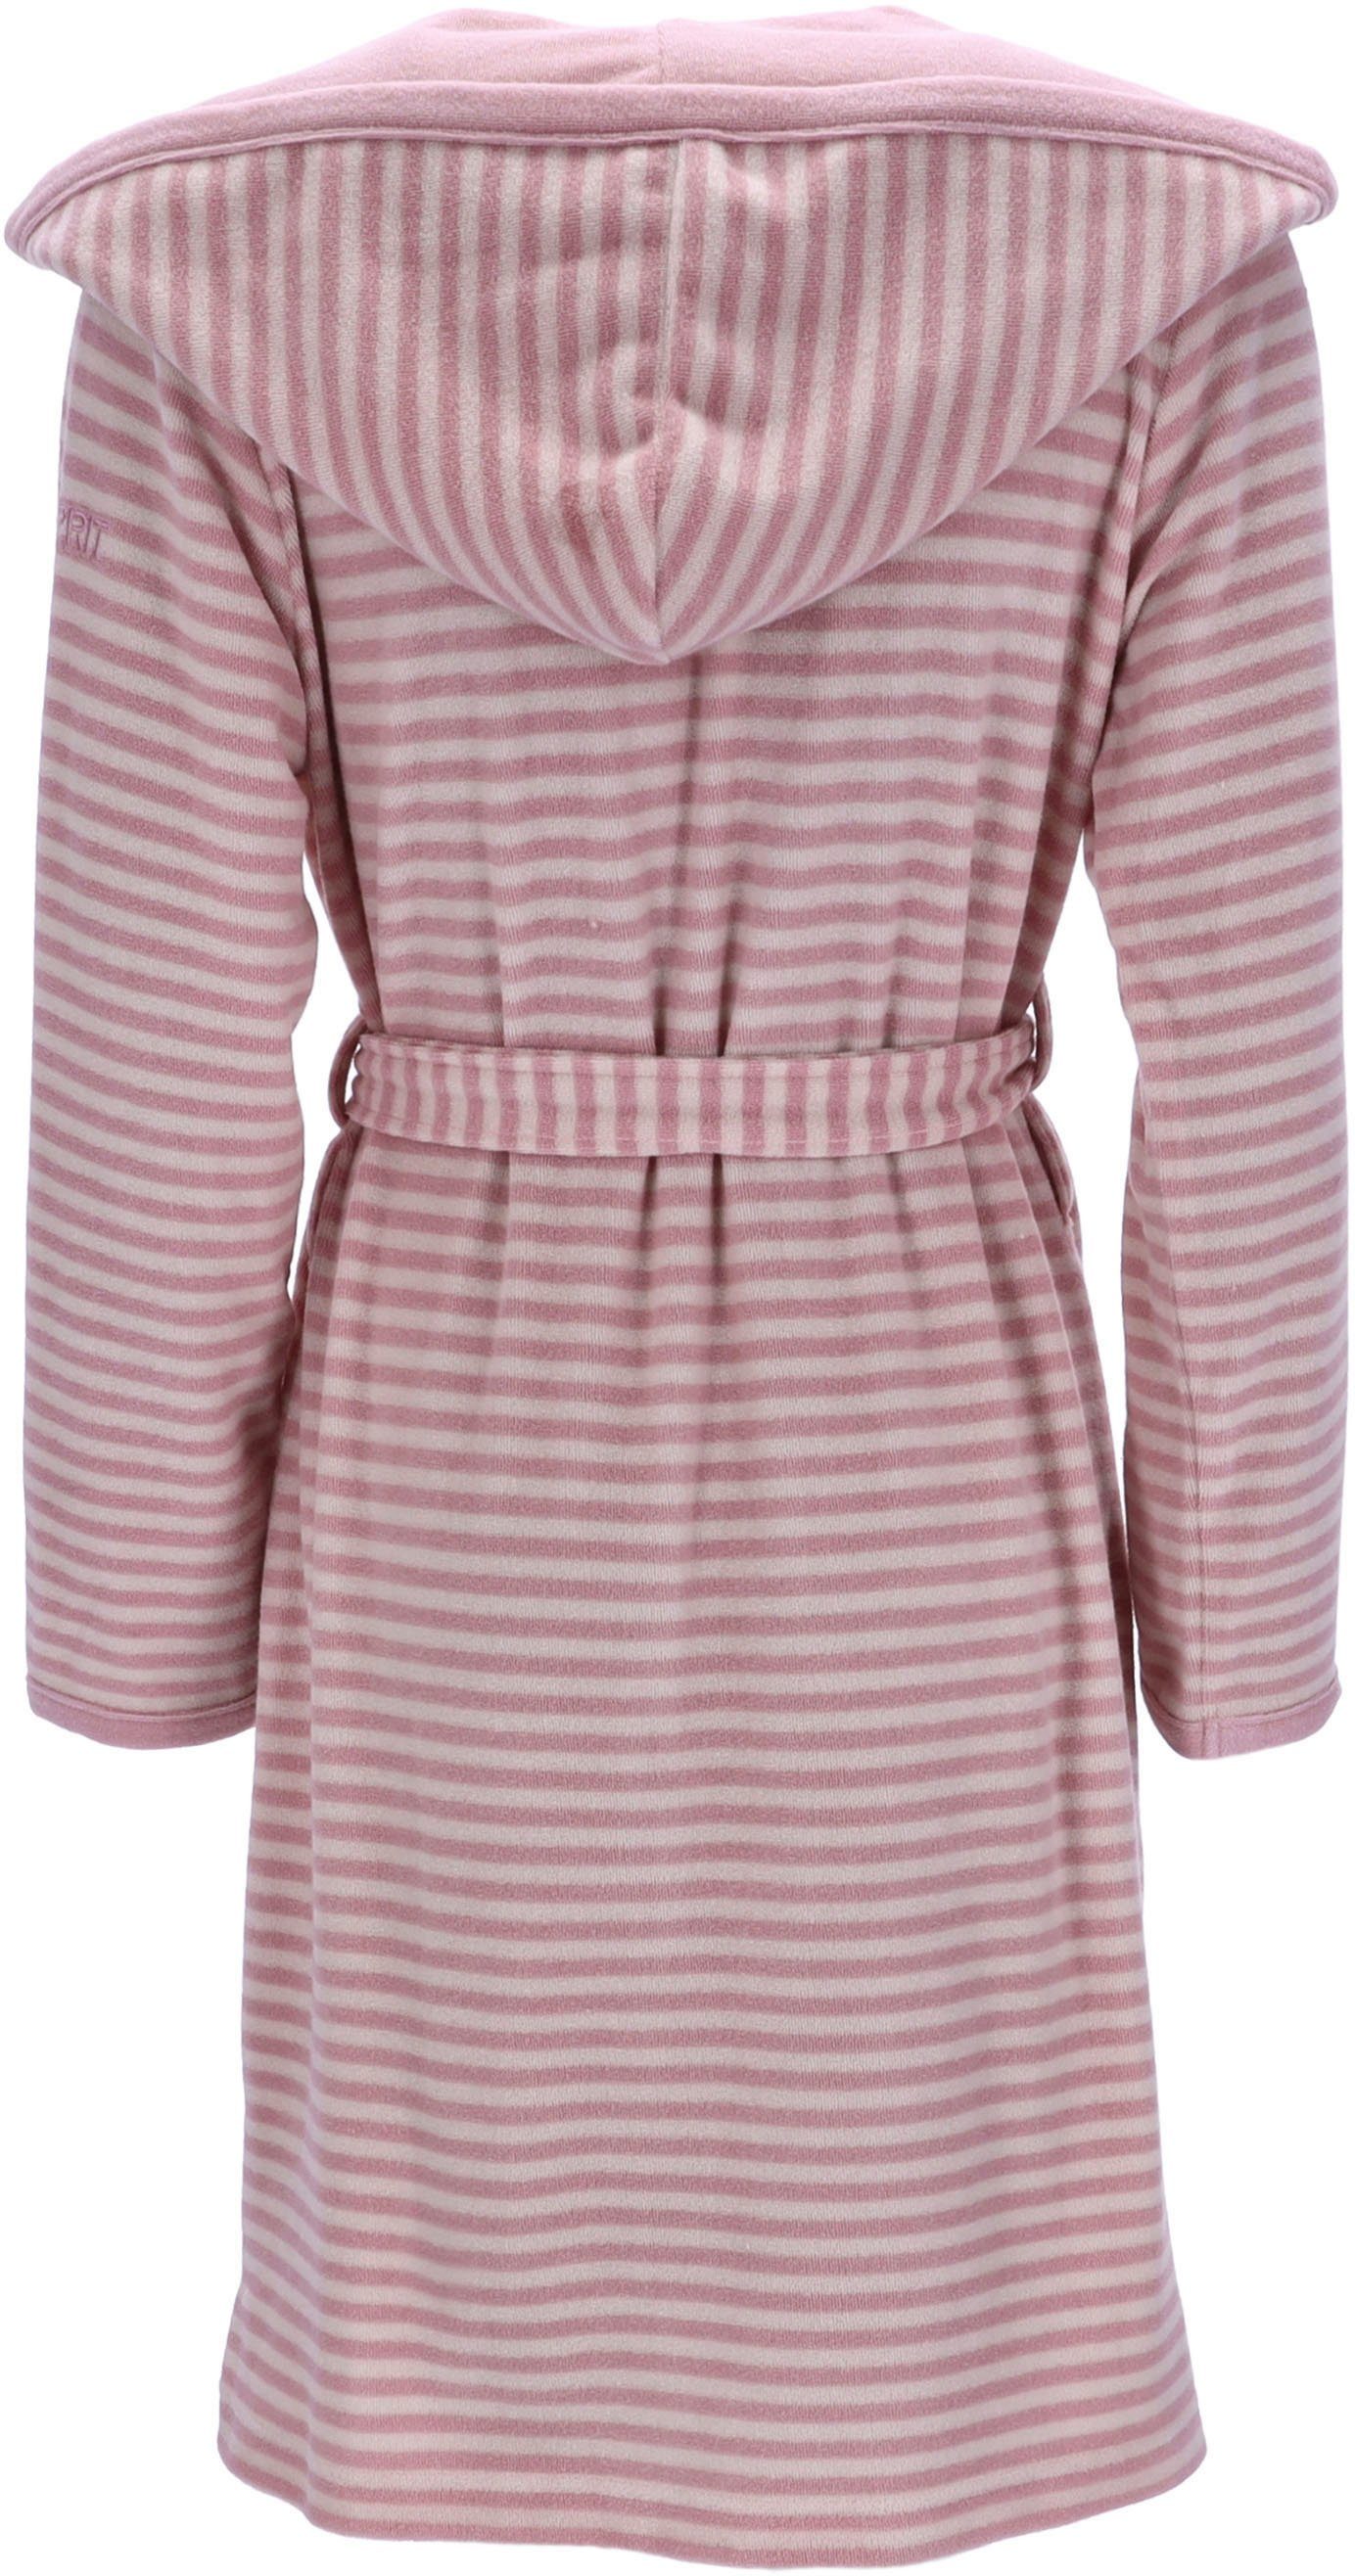 Esprit Damenbademantel rose Kapuze, Hoody, mit Striped Jersey, kurz gestreift, & Logostickerei, Kaputze Kurzform, Gürtel